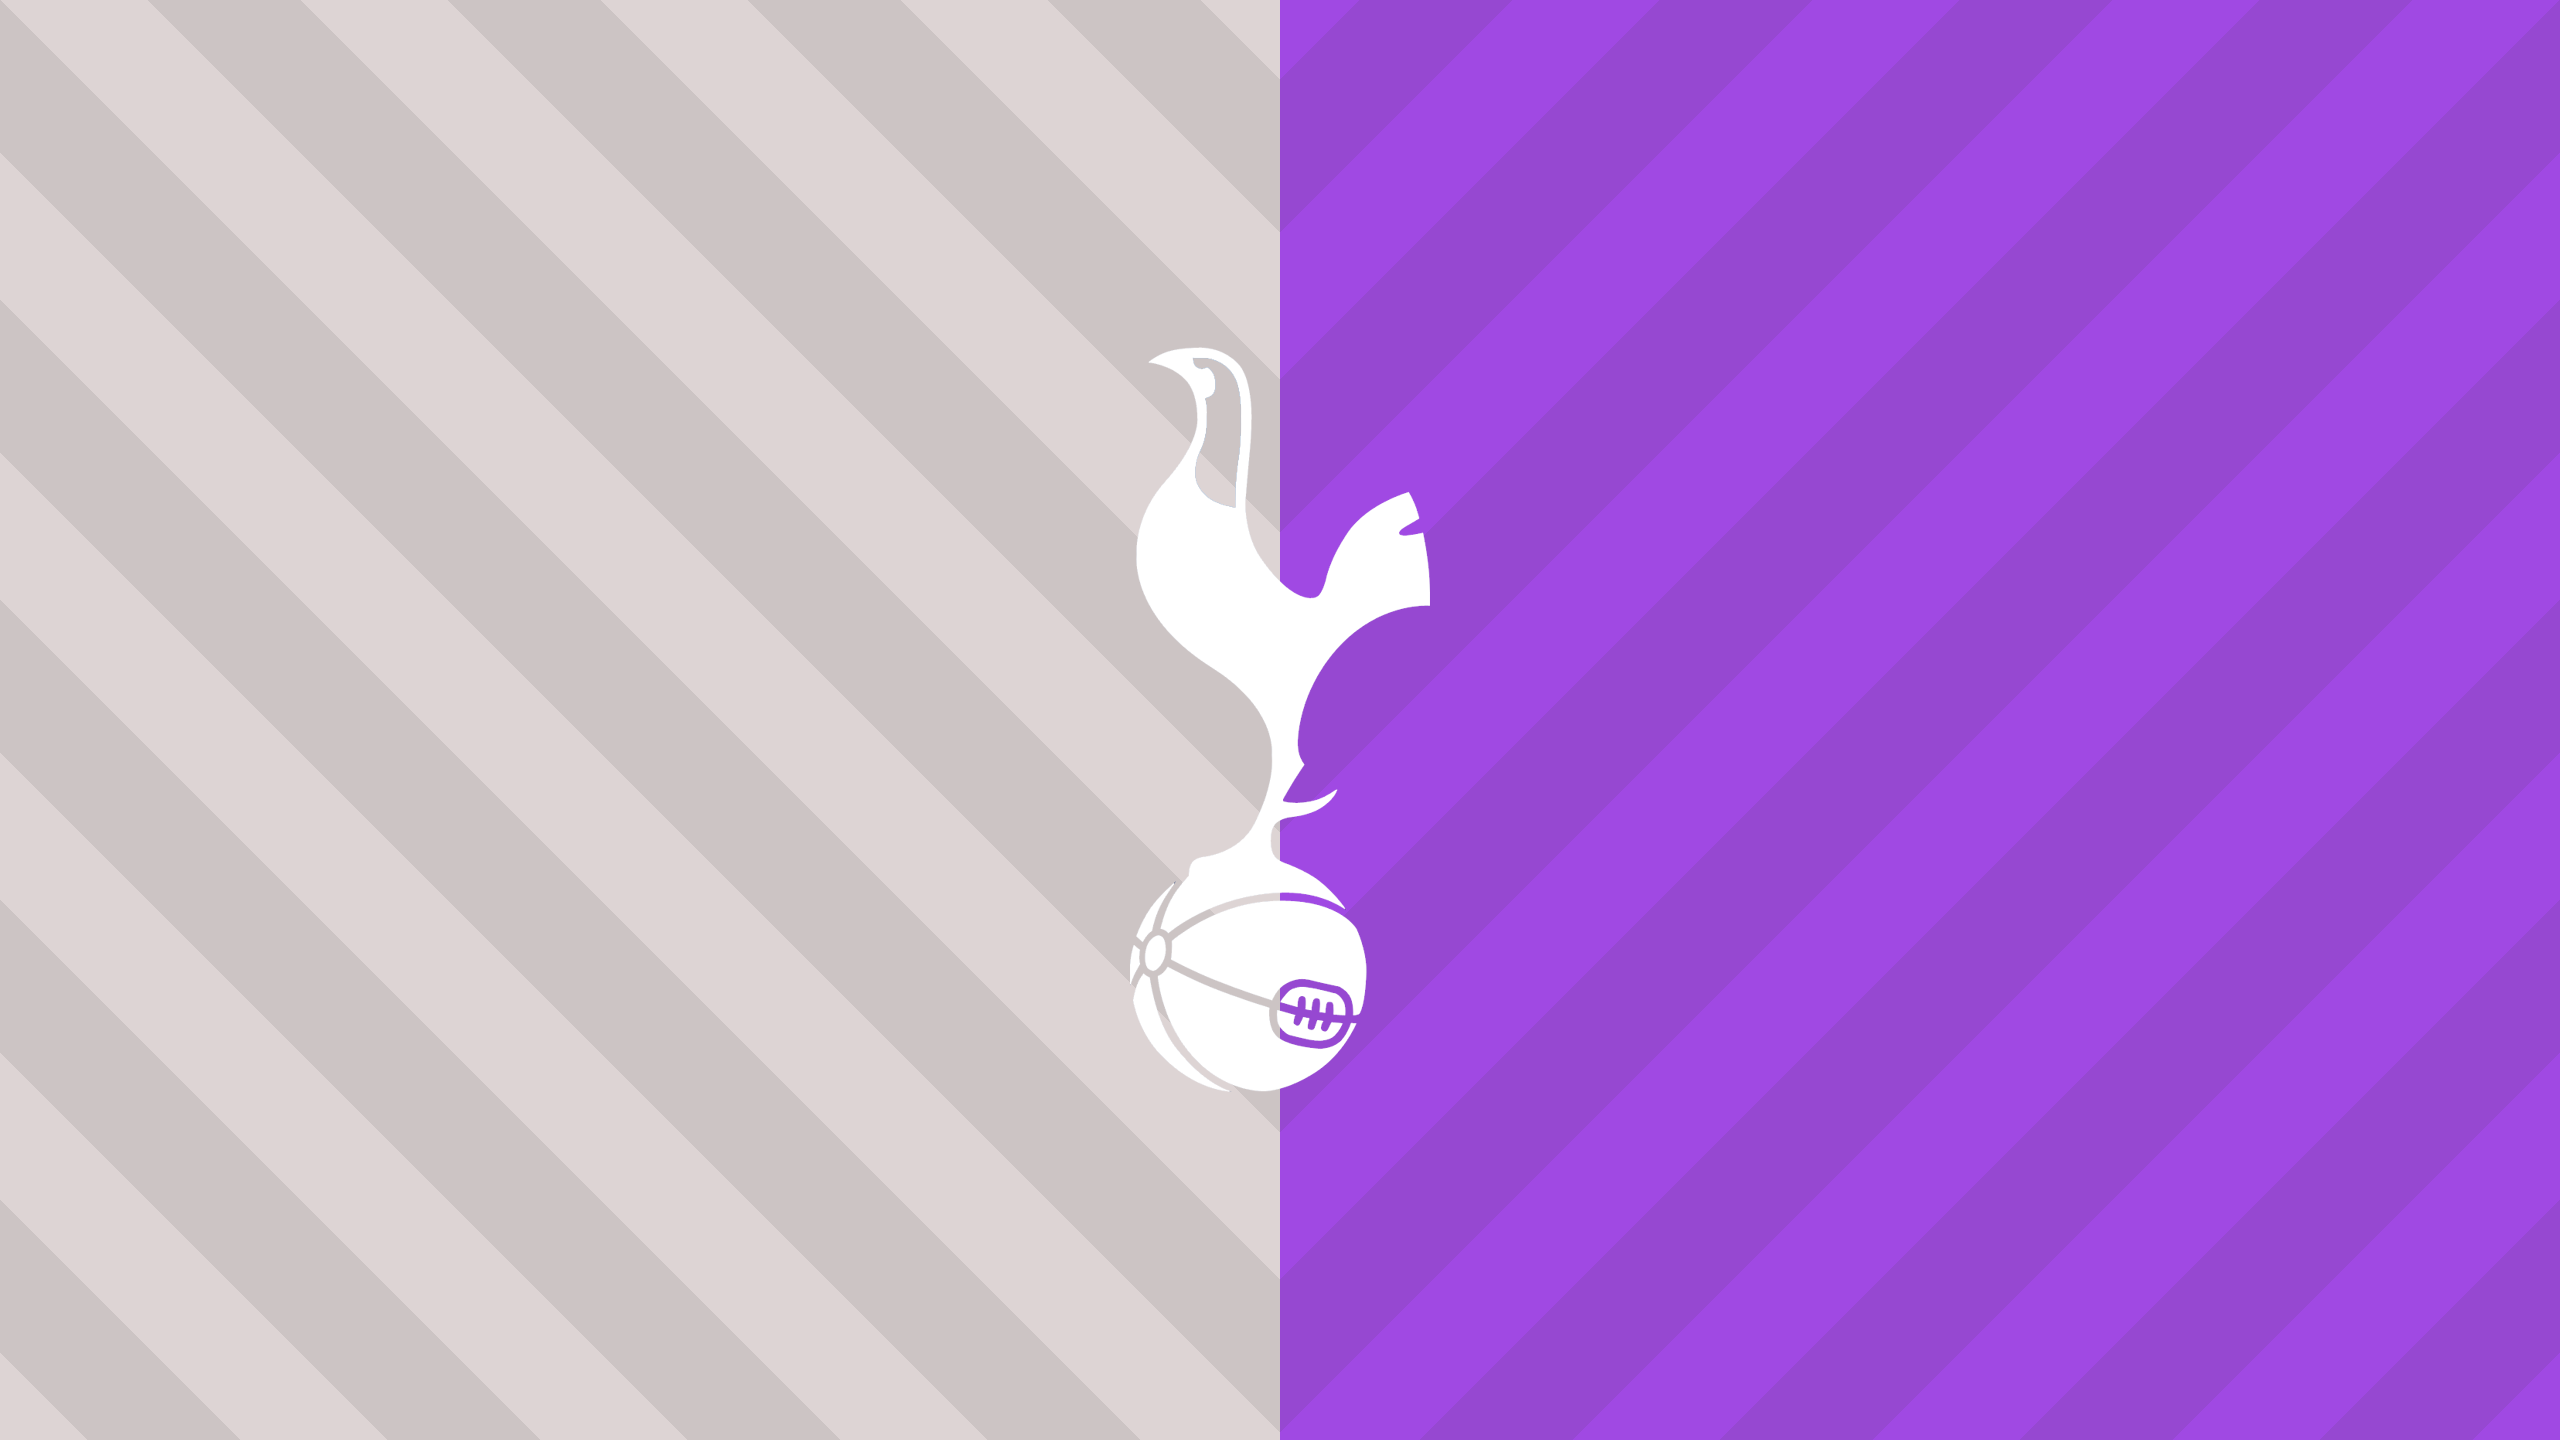 Tottenham Hotspur . HD Wallpaper